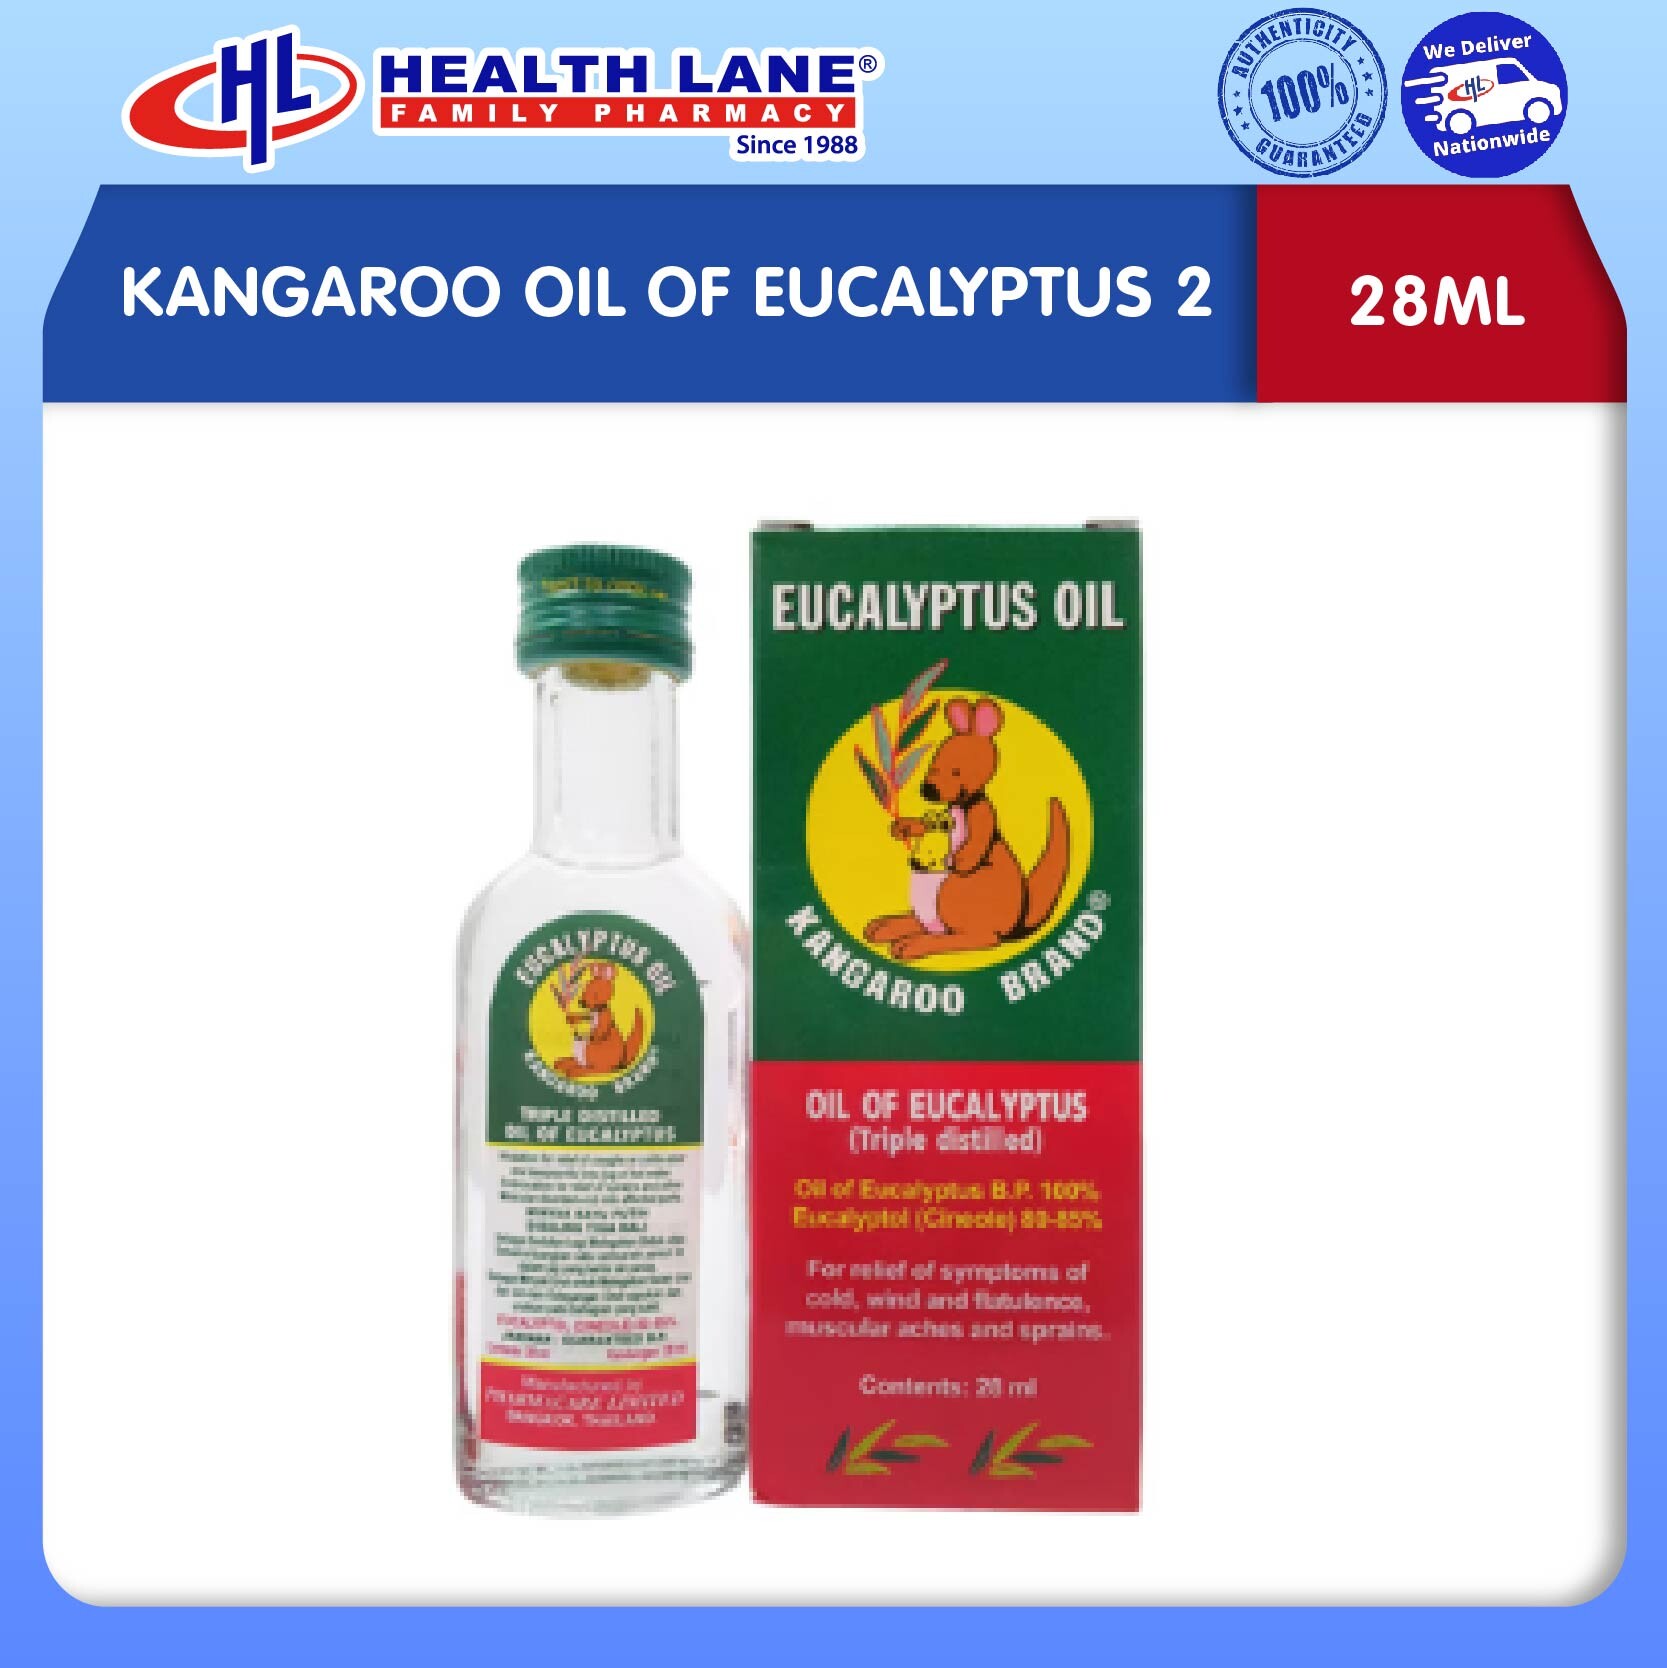 KANGAROO OIL OF EUCALYPTUS 2 (28ML)